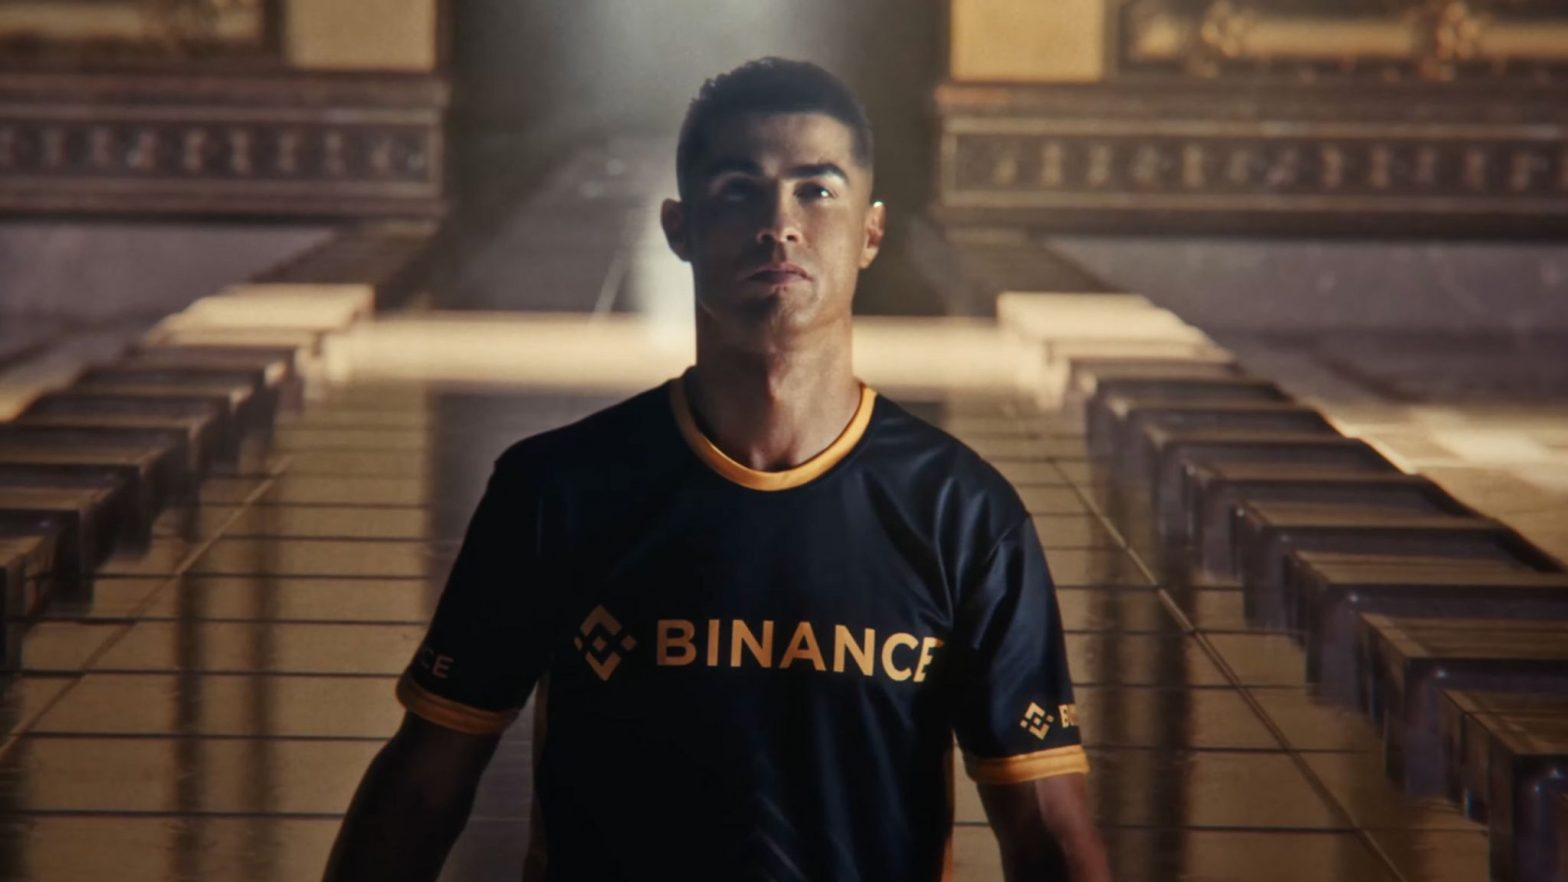 financialounge -  Bianance class action criptovalute Cristiano Ronaldo finanza